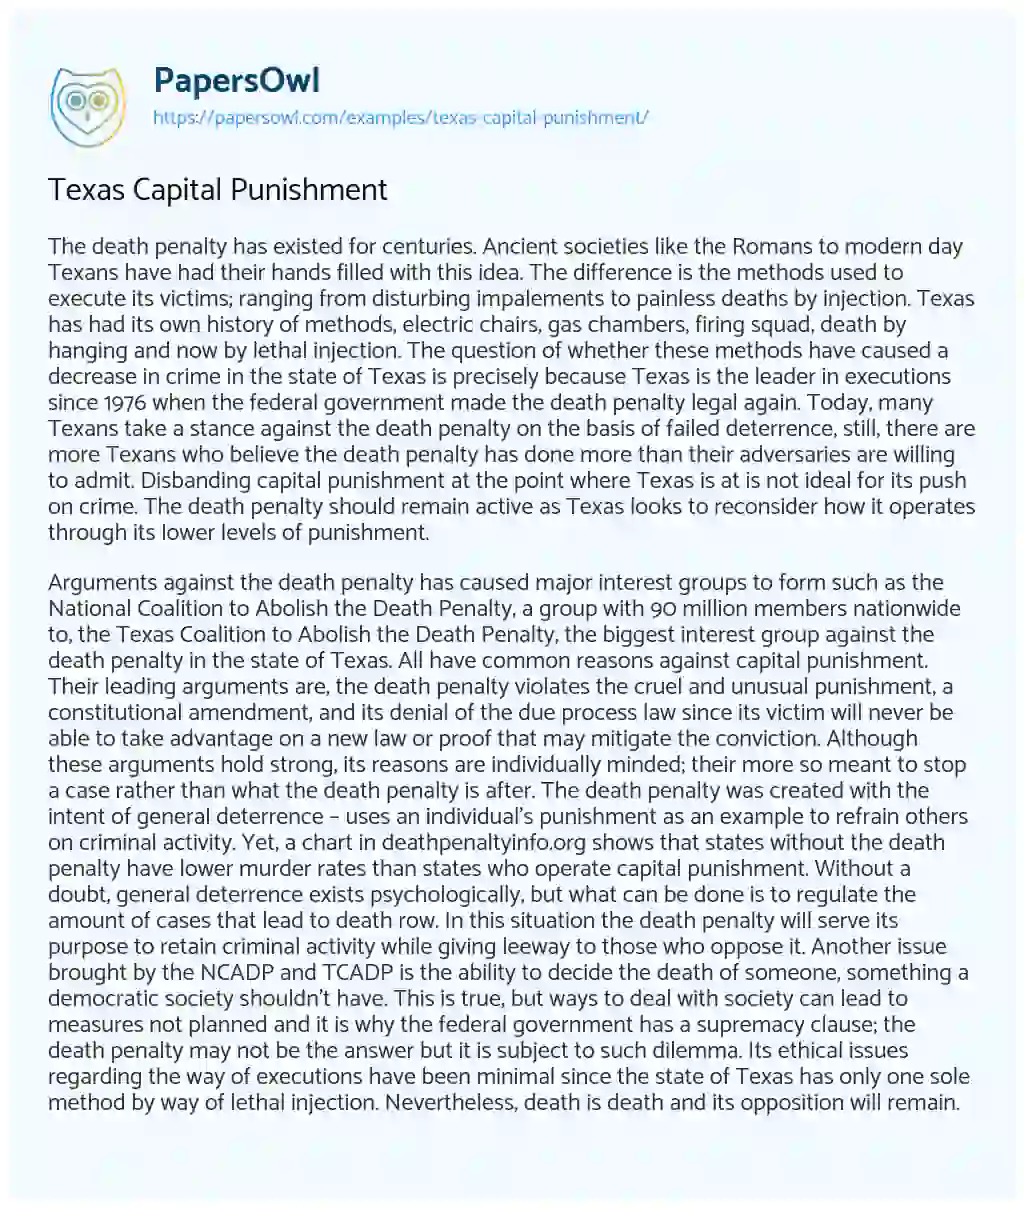 Essay on Texas Capital Punishment